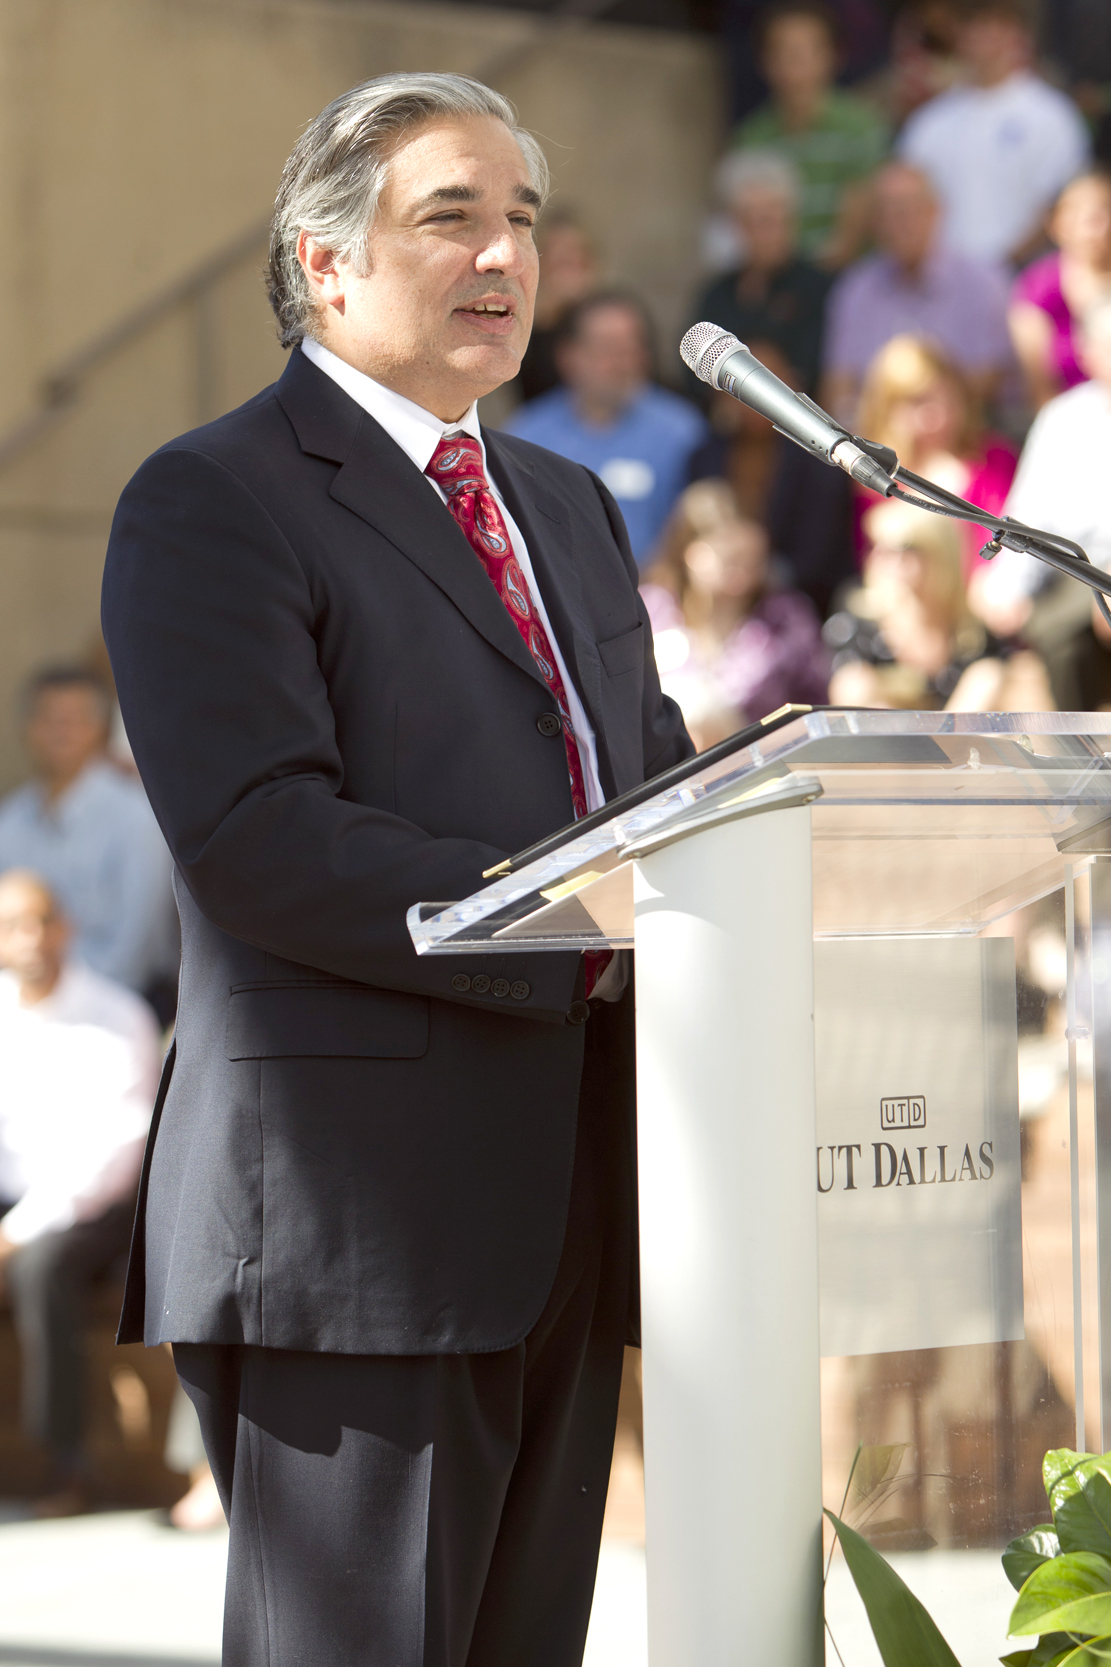 Chancellor Francisco G. Cigarroa, M.D.